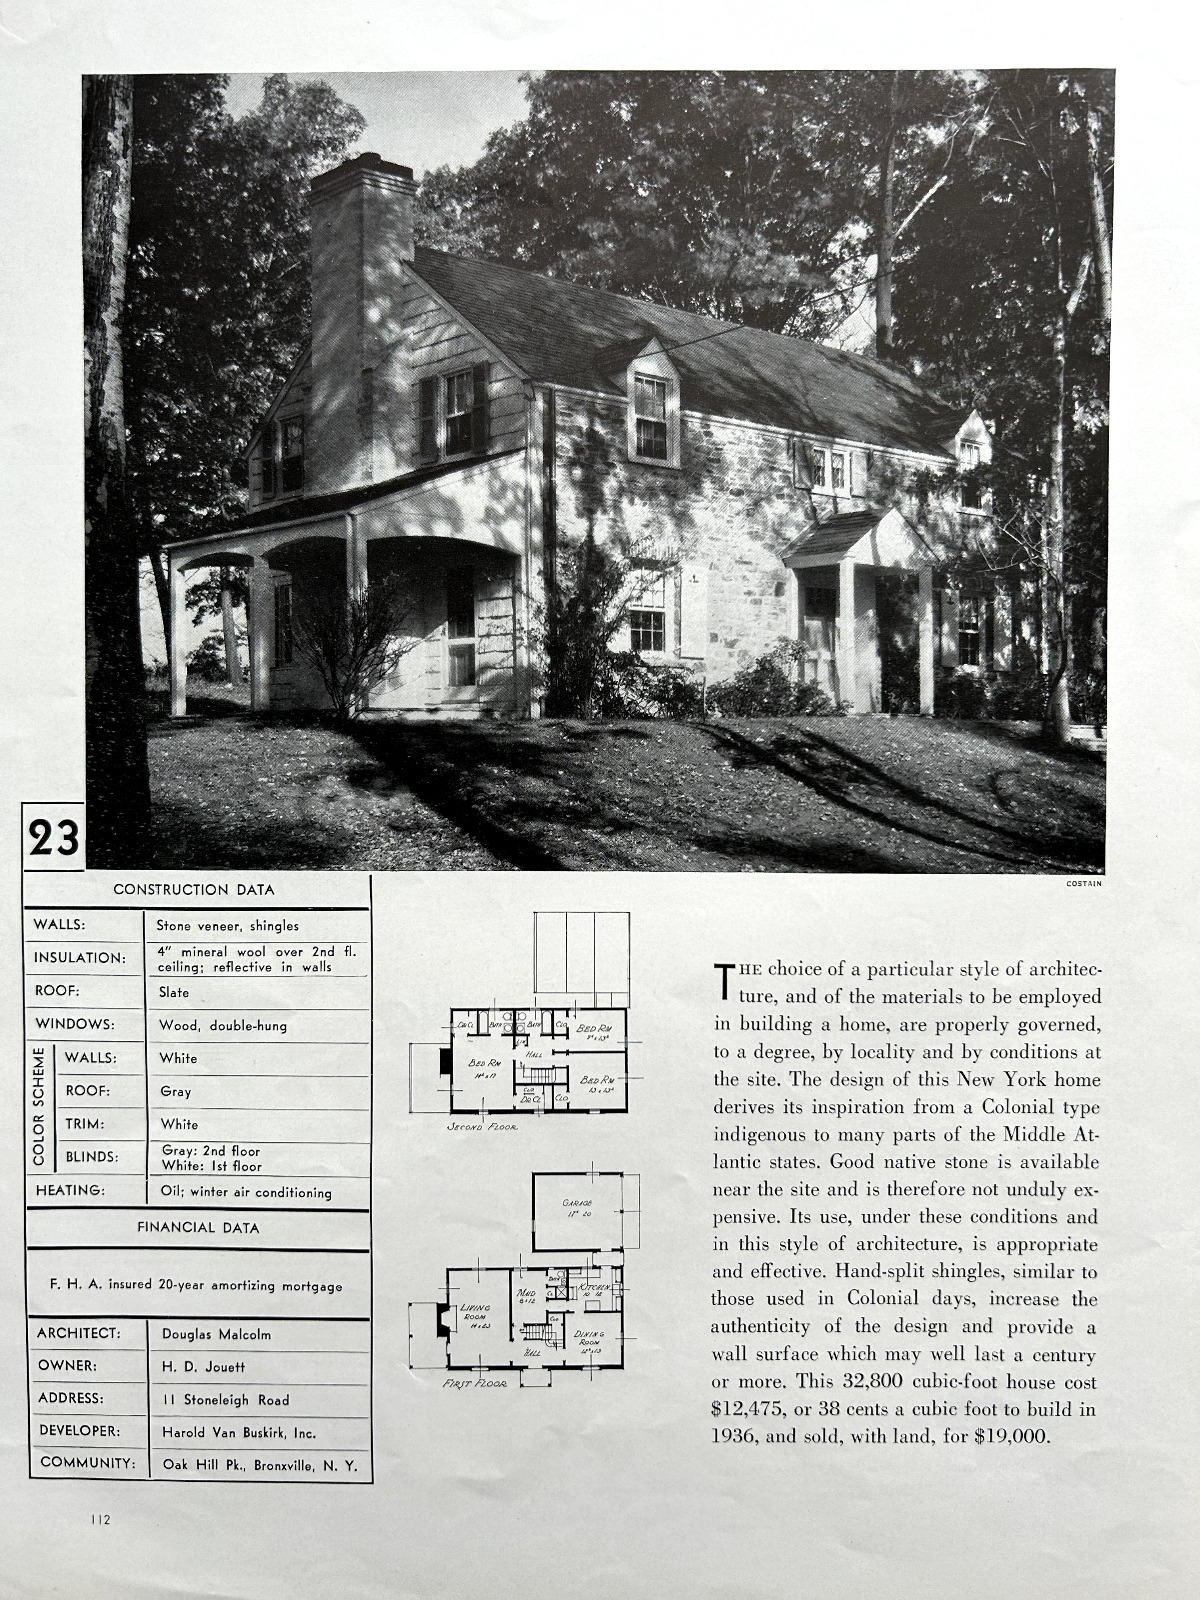 H. D. Jouett Home 1937, Oak Hill Pk., Bronxville, NY, Douglas Malcolm, Architect